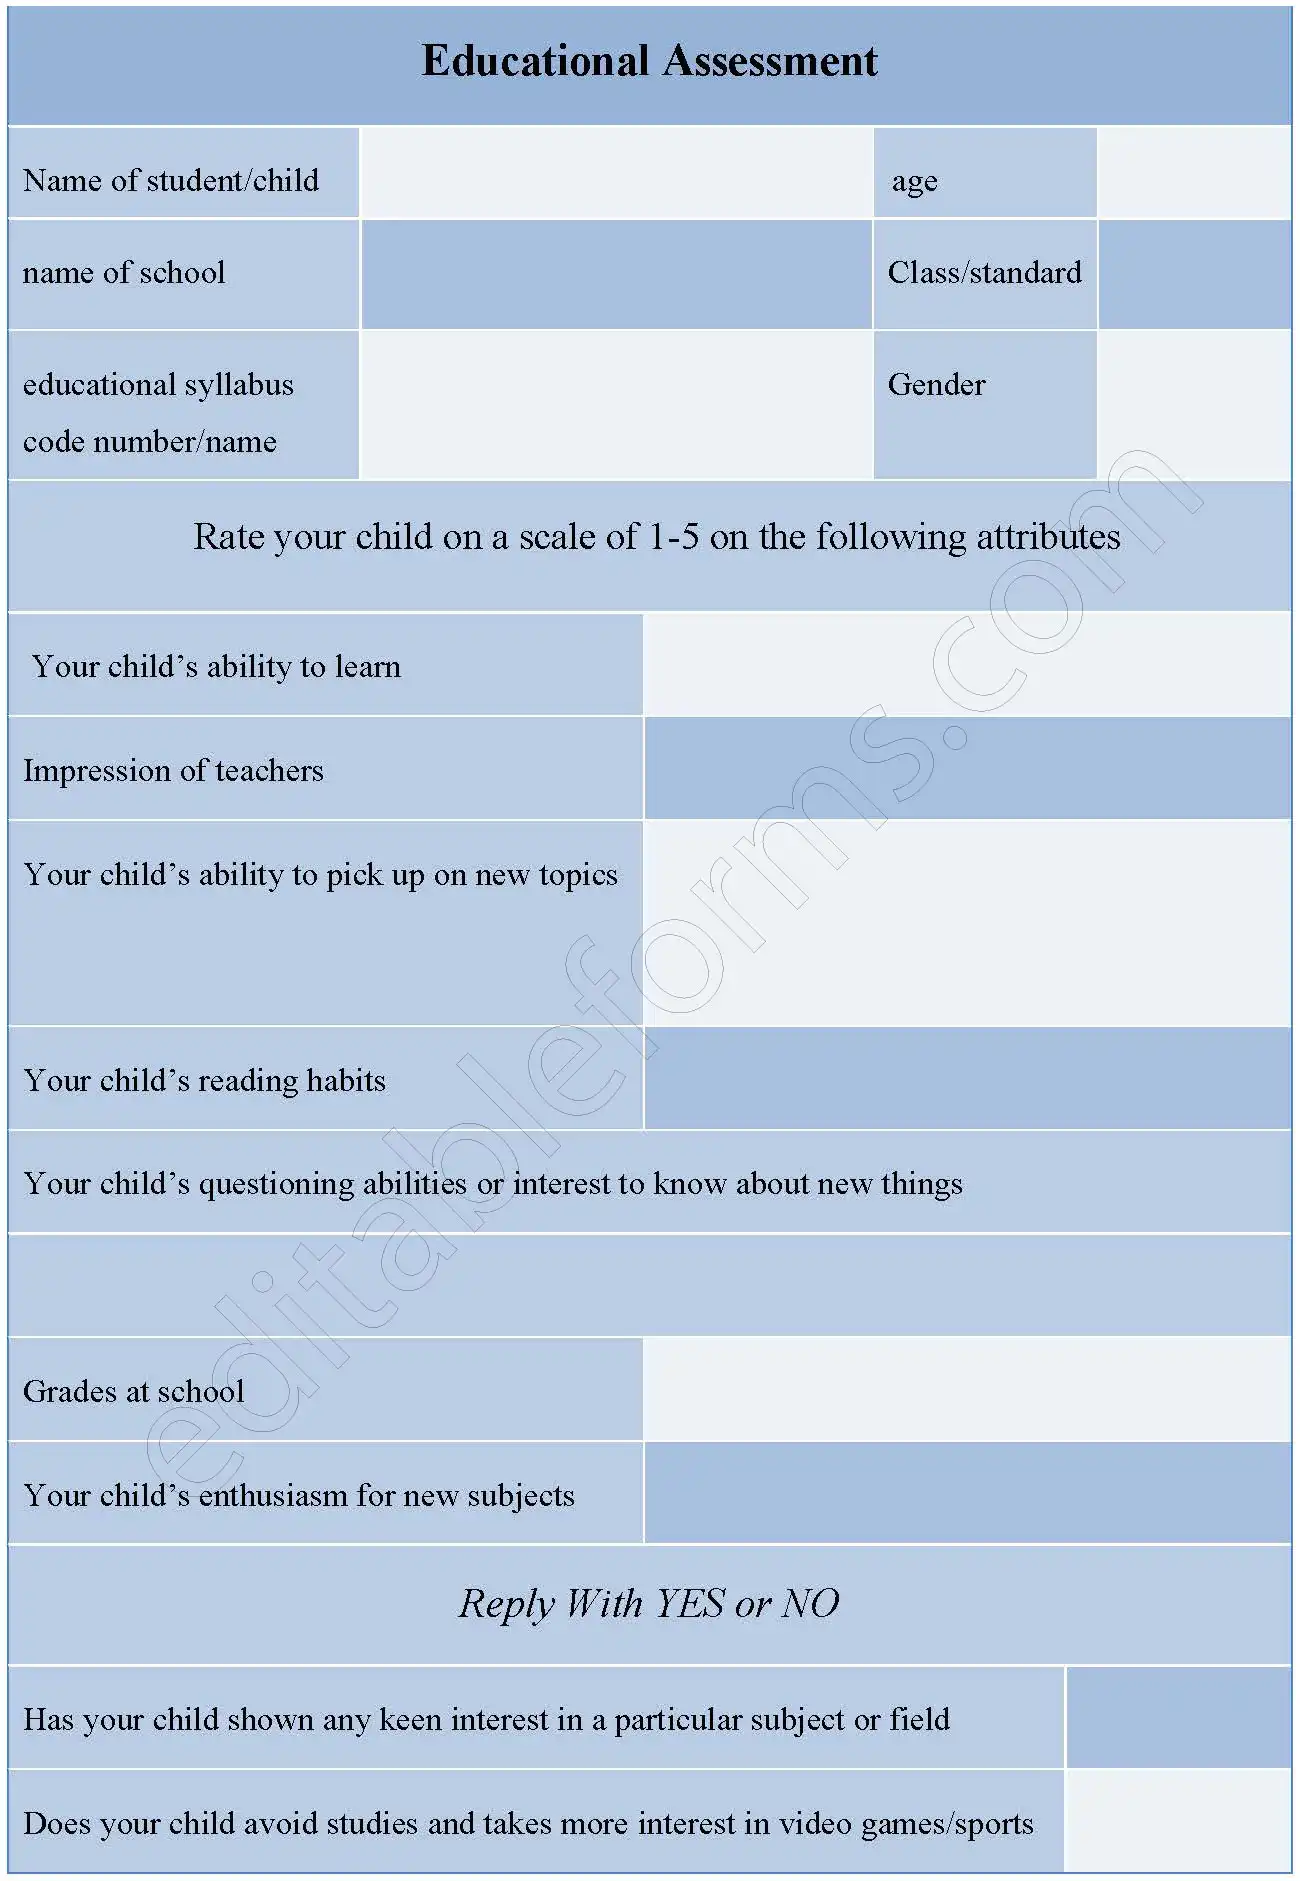 Educational Assessment Fillable PDF Form